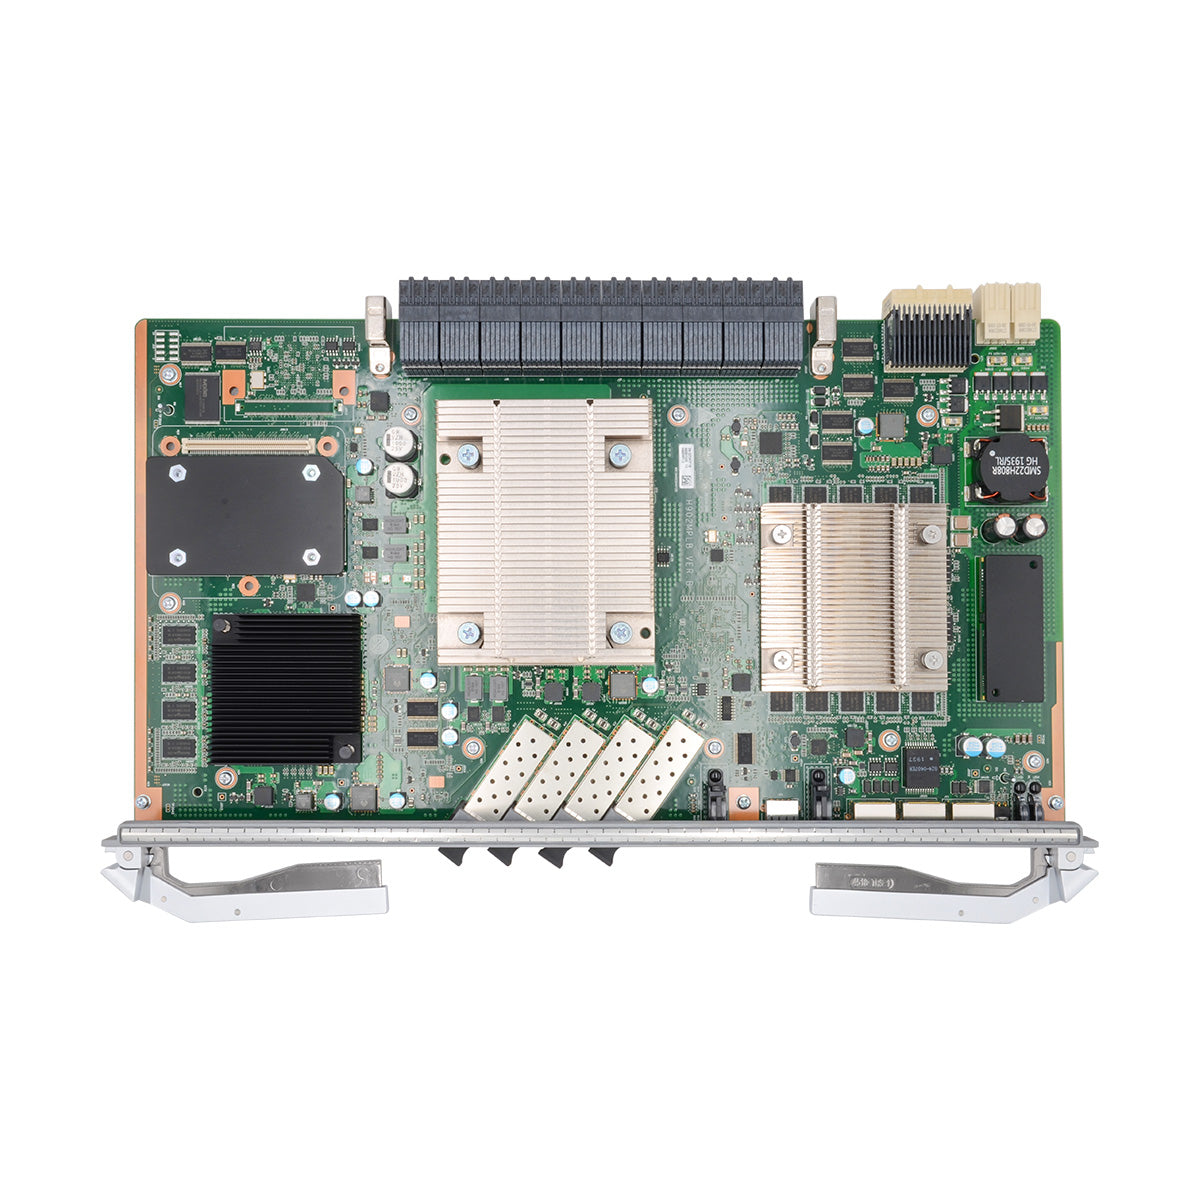 Huawei H902MPLB Main Control Board for MA5800-X17/MA5800-X15/MA5800-X7 OLT